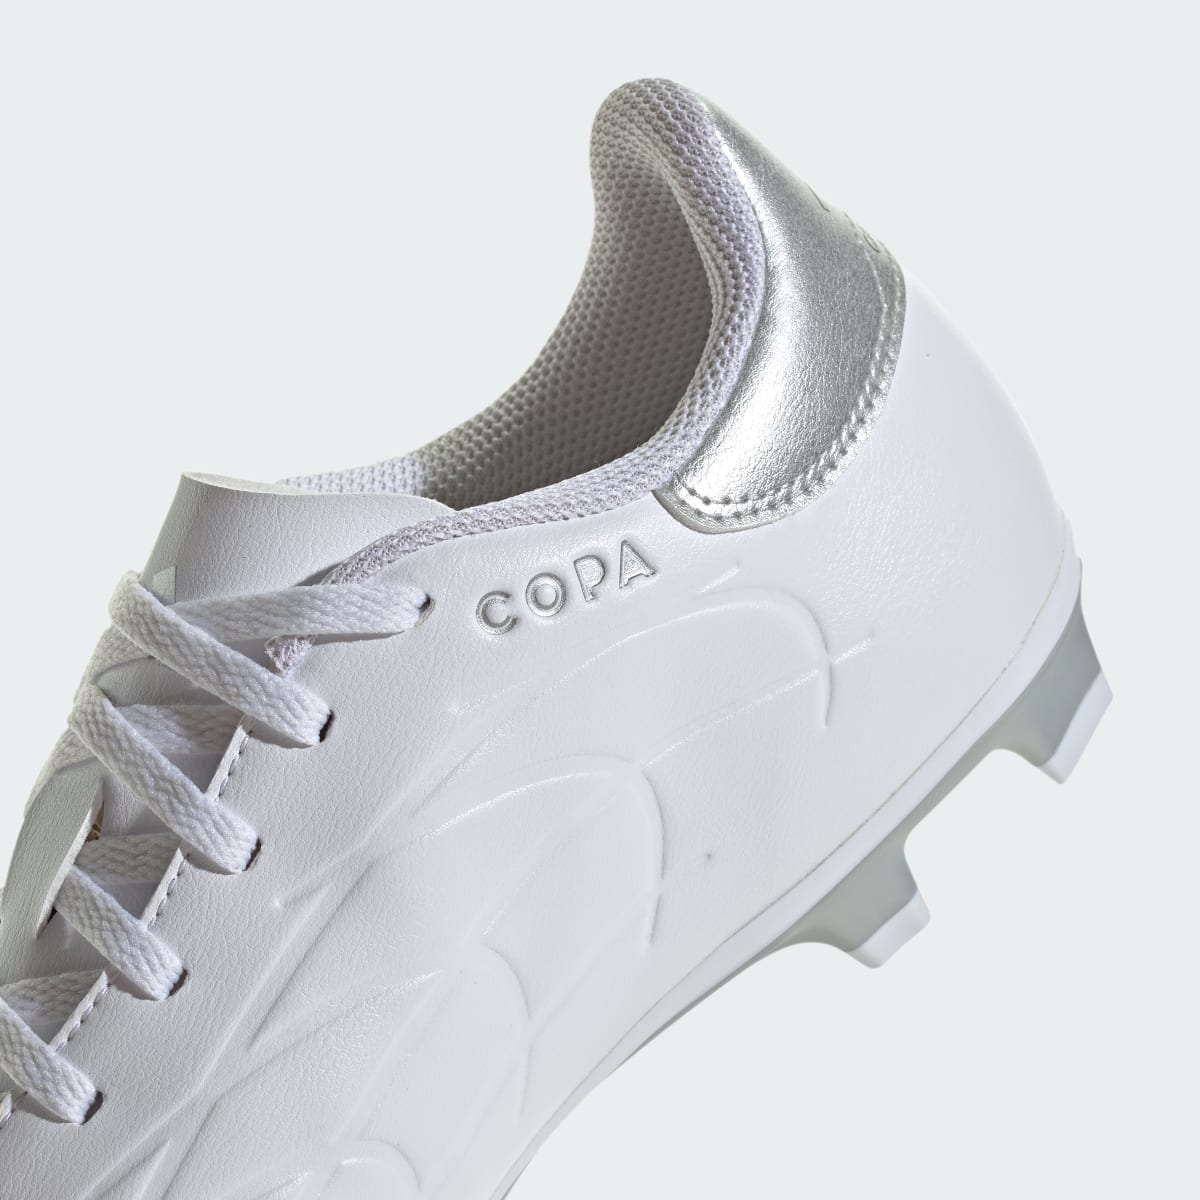 Adidas Copa Pure II Club Flexible Ground Boots. 8